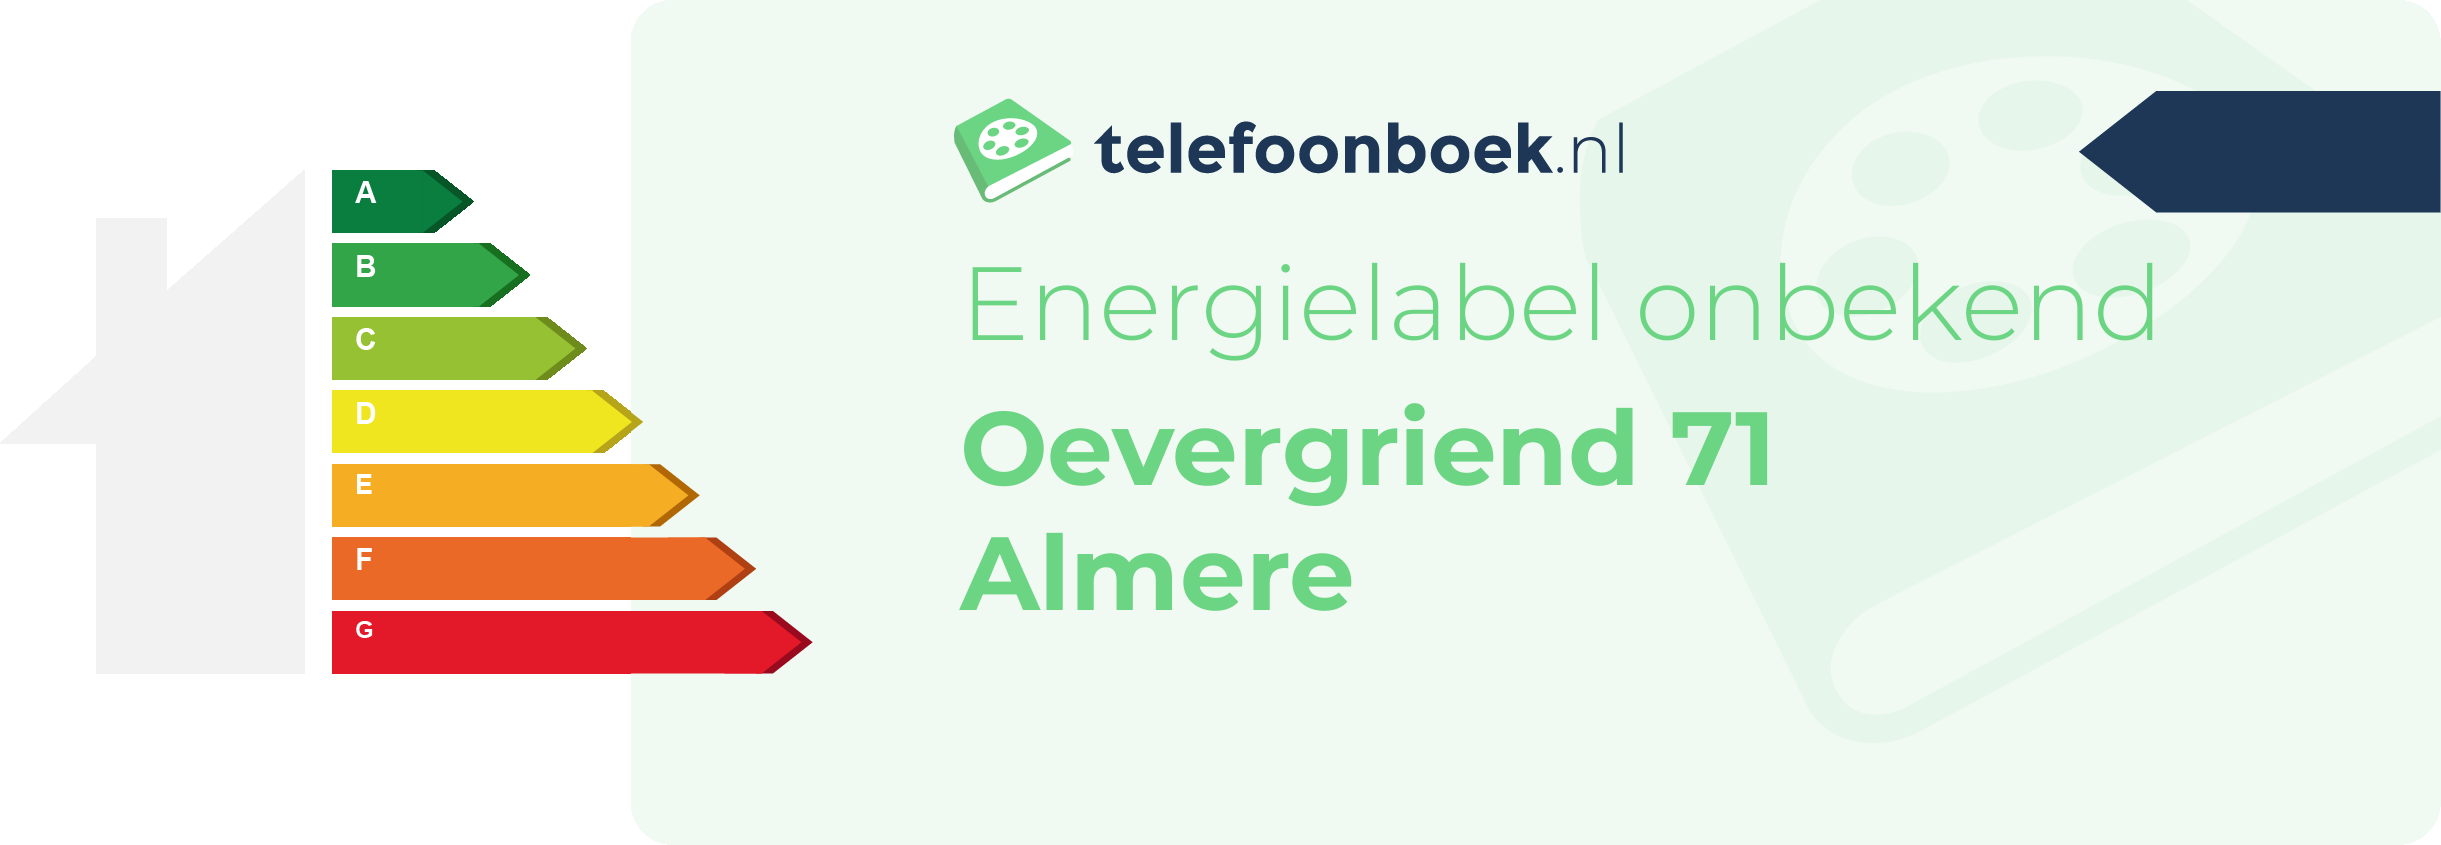 Energielabel Oevergriend 71 Almere